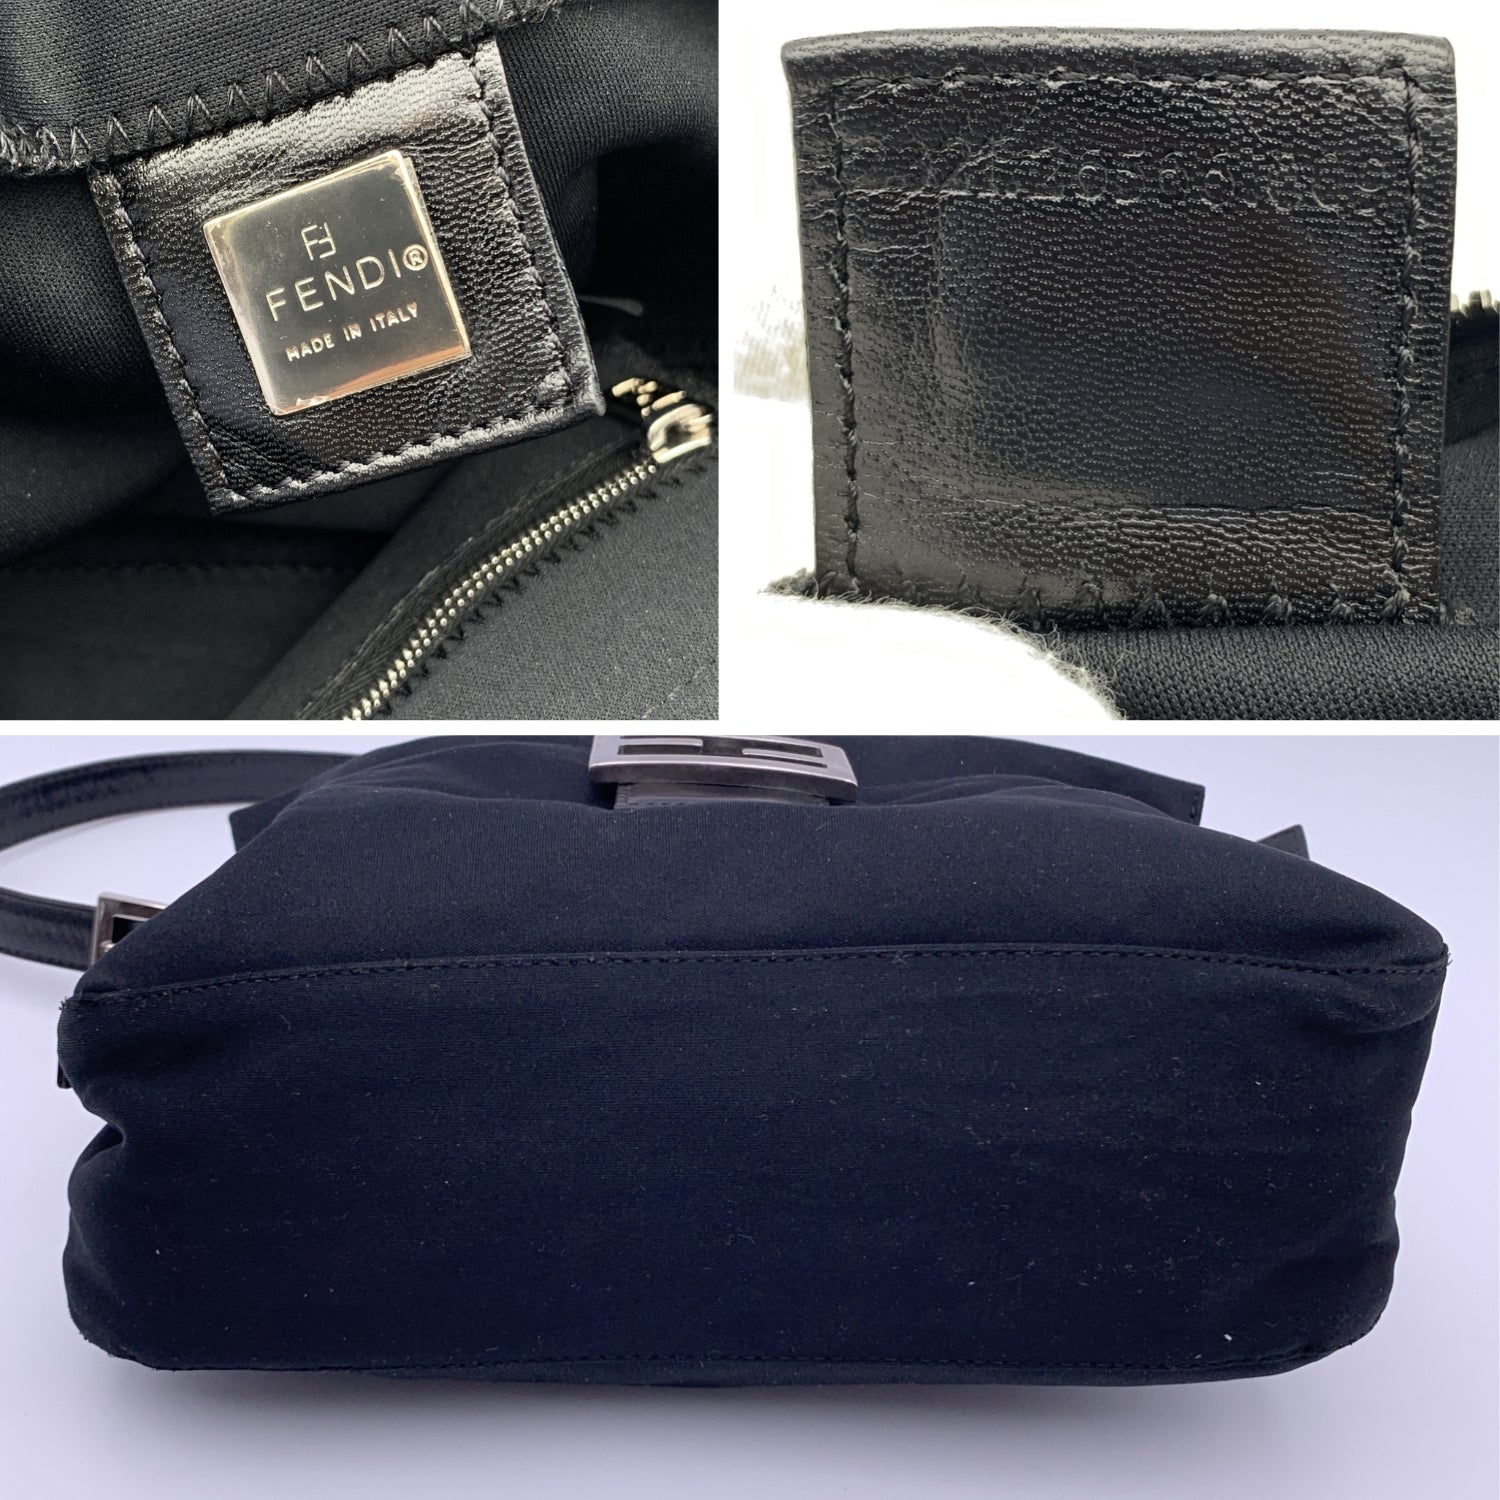 SATTIN DUFFEL BAG CHICAGO | FonjepShops | Fendi First Handbag 401914